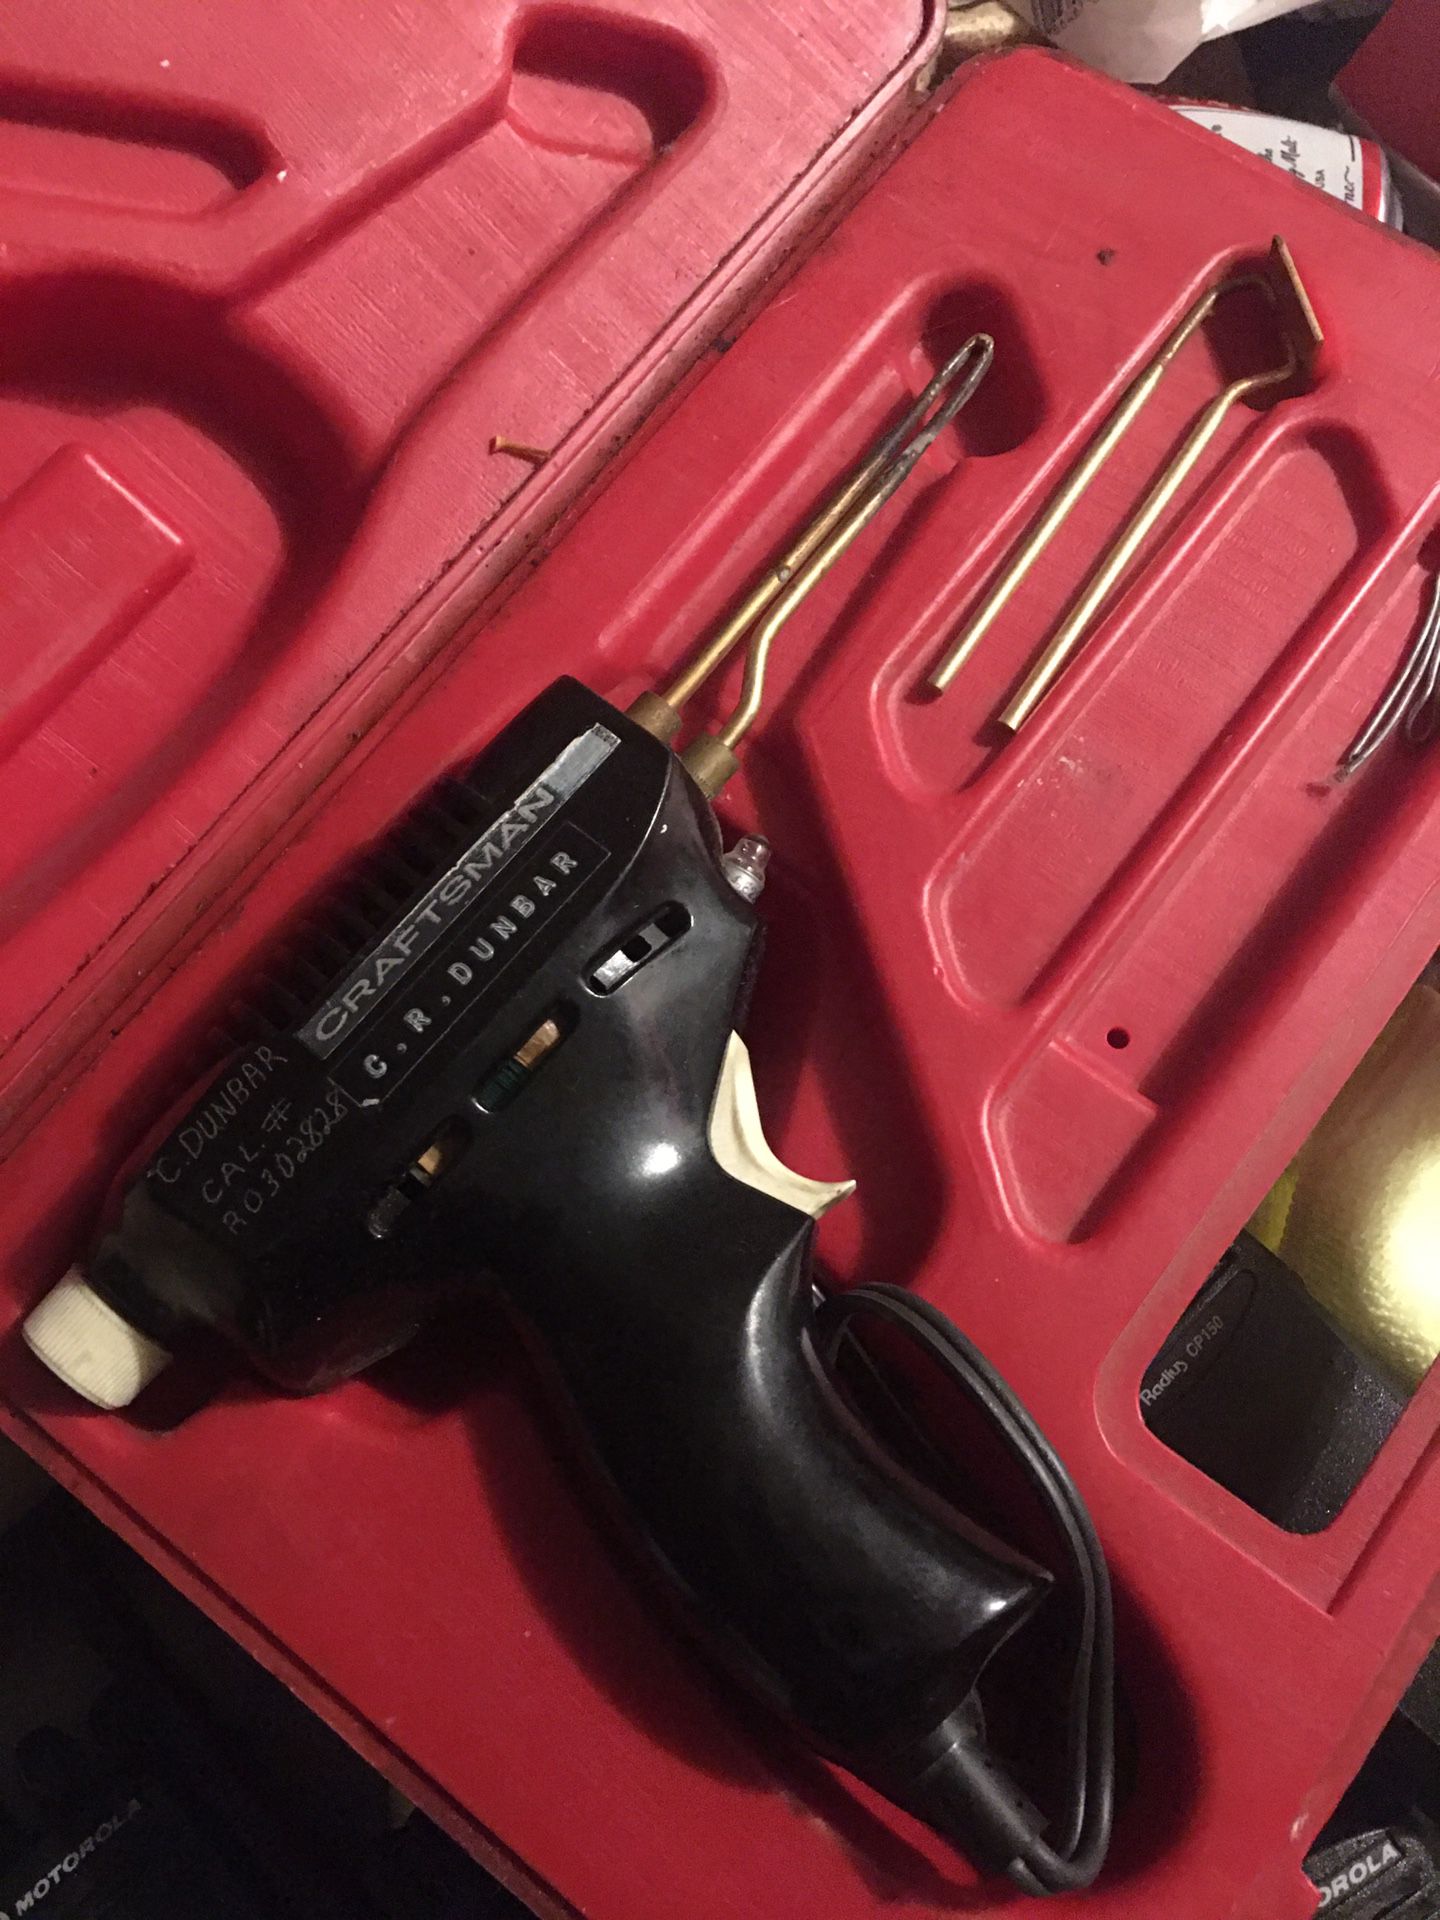 Craftsman soldering gun in case